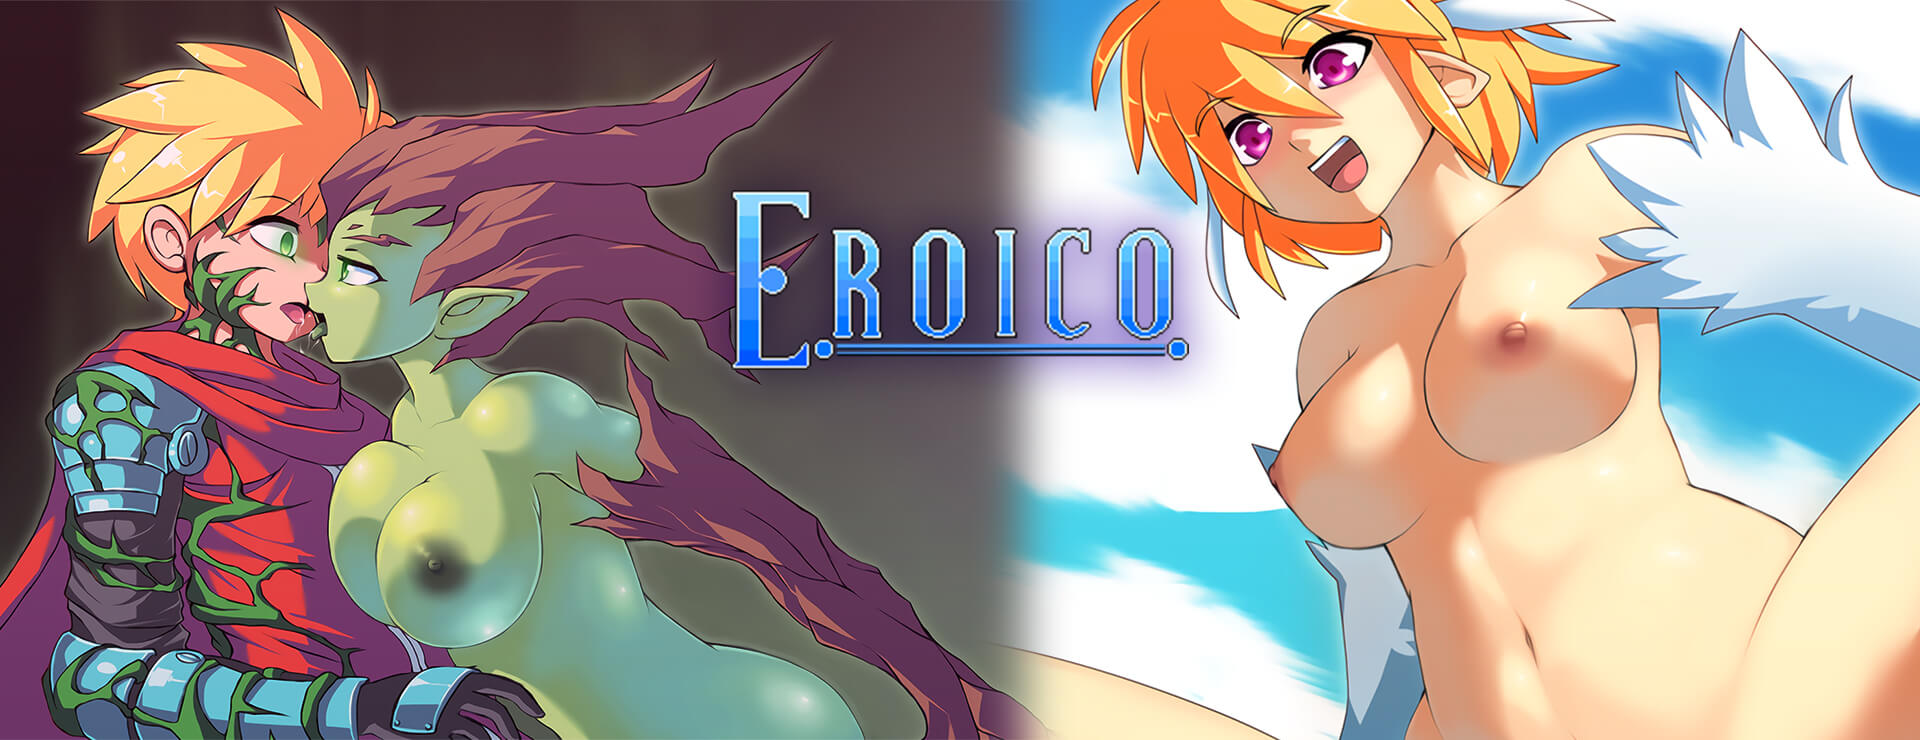 Eroico - Action Adventure Spiel